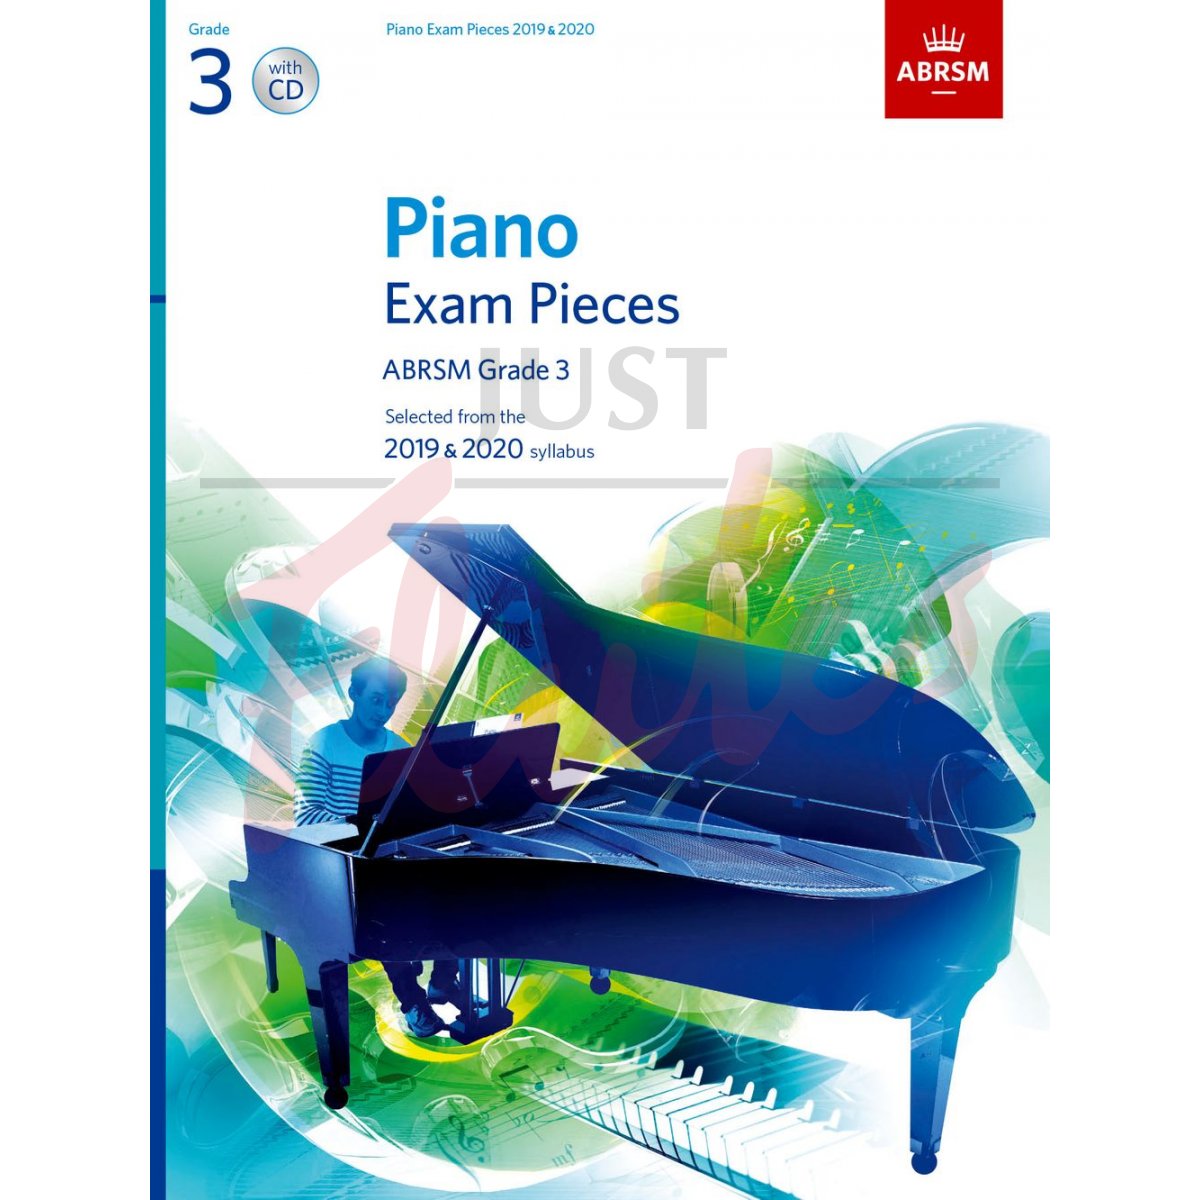 Piano Exam Pieces 2019-2020, Grade 3